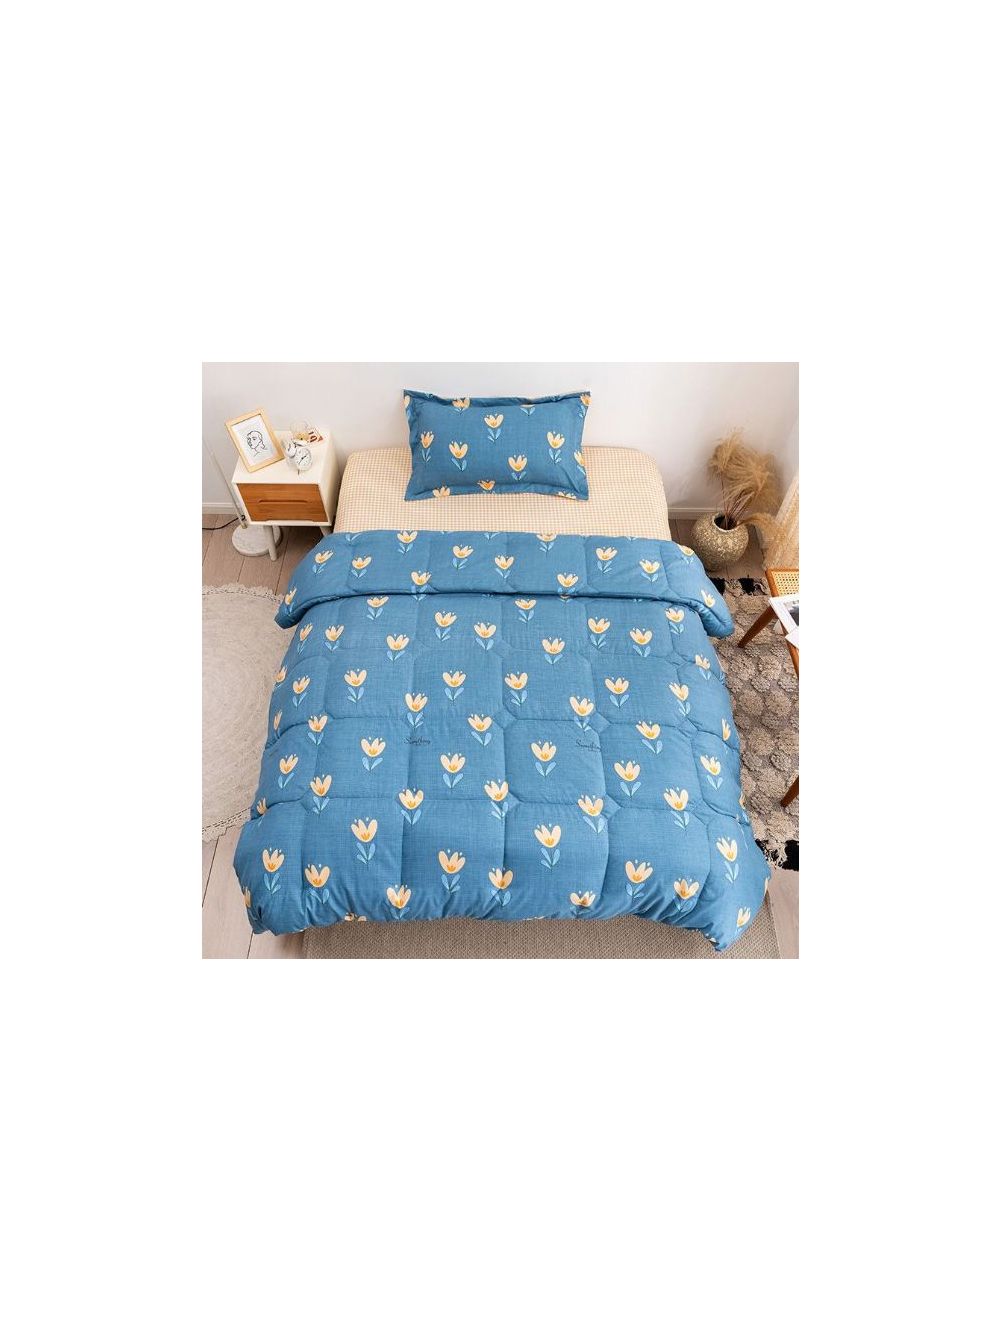 Rishahome 3 Piece Single Size Comforter Set Microfiber Blue 150x200cm-KBLCS0003